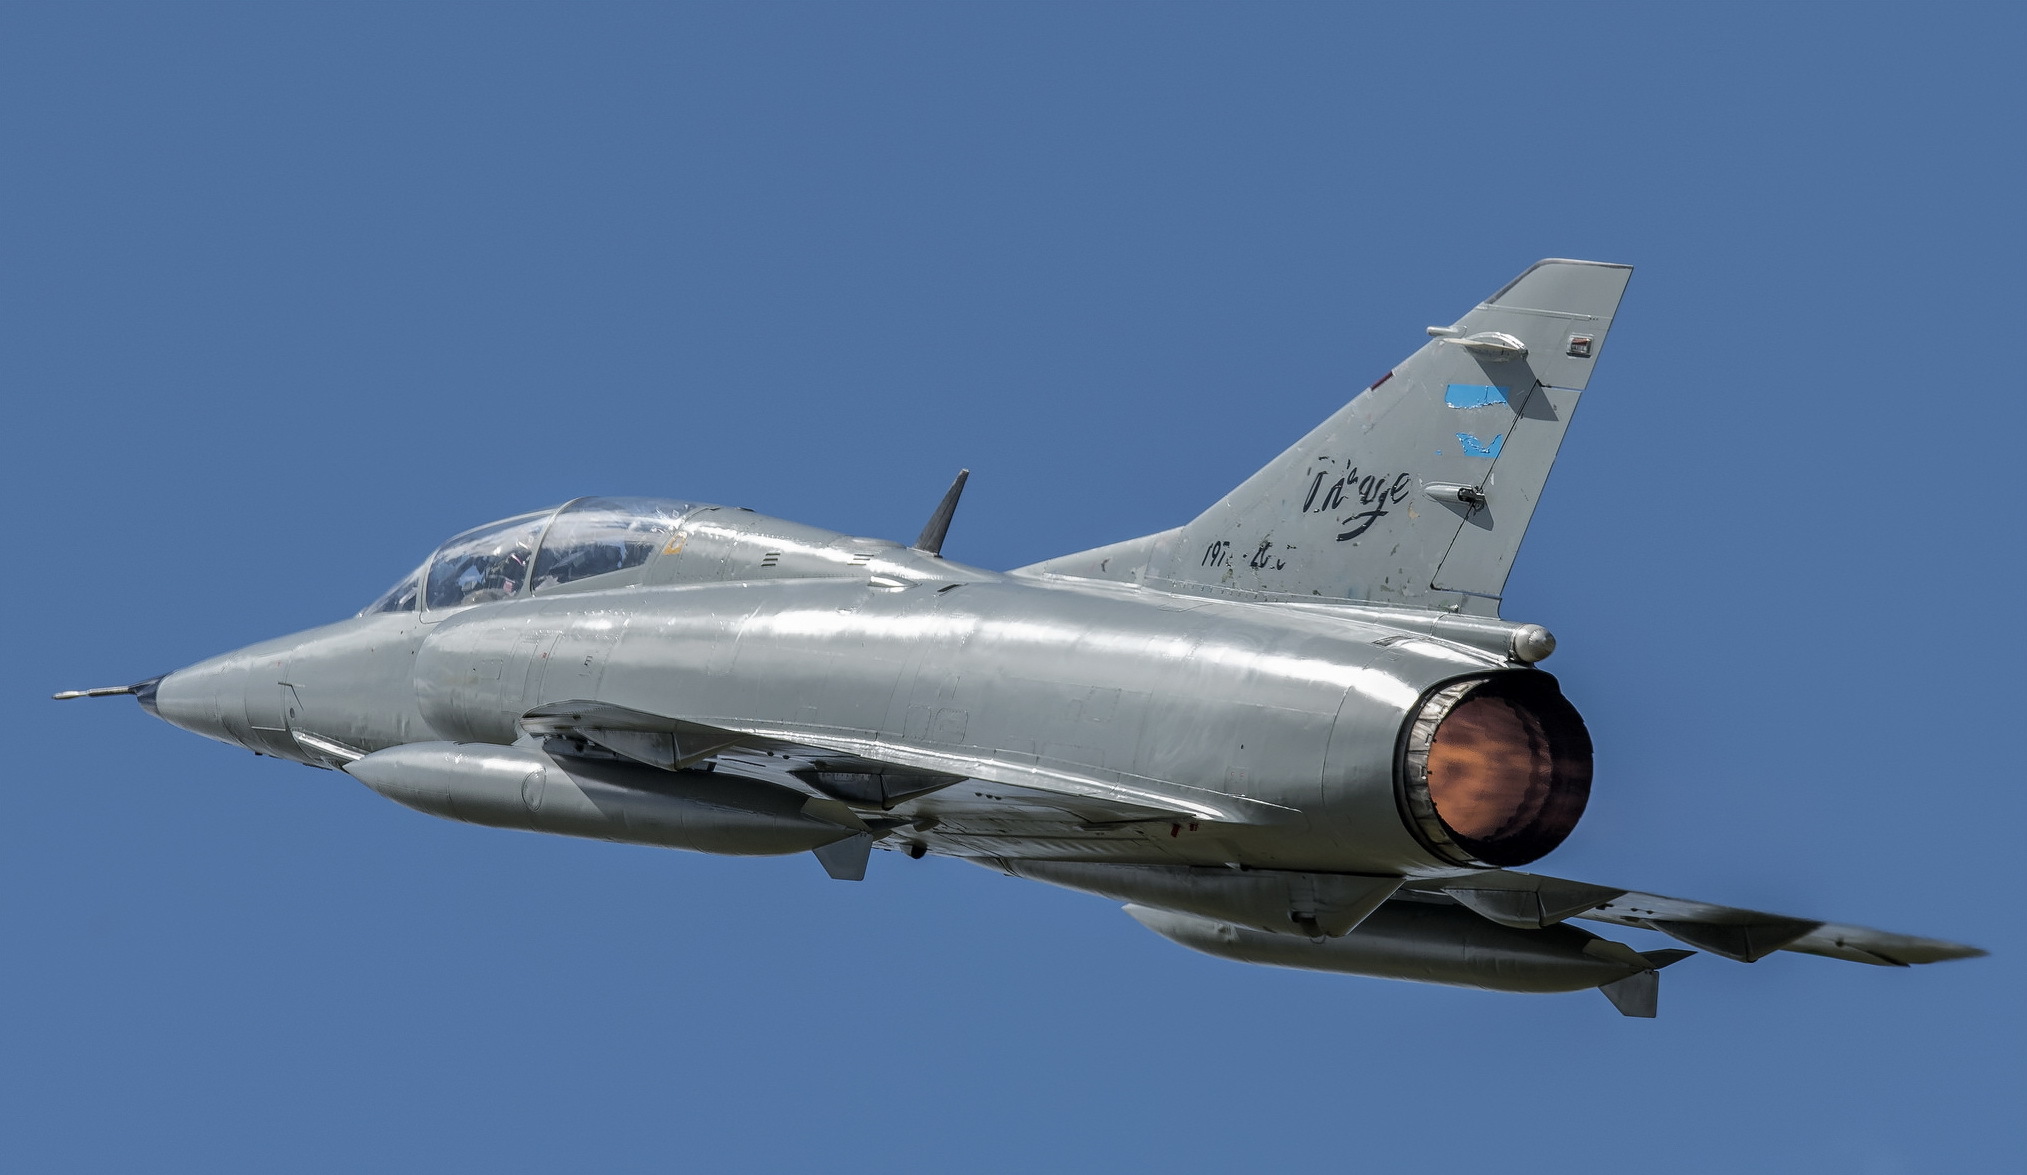 Télécharger des fonds d'écran Dassault Mirage Iii HD